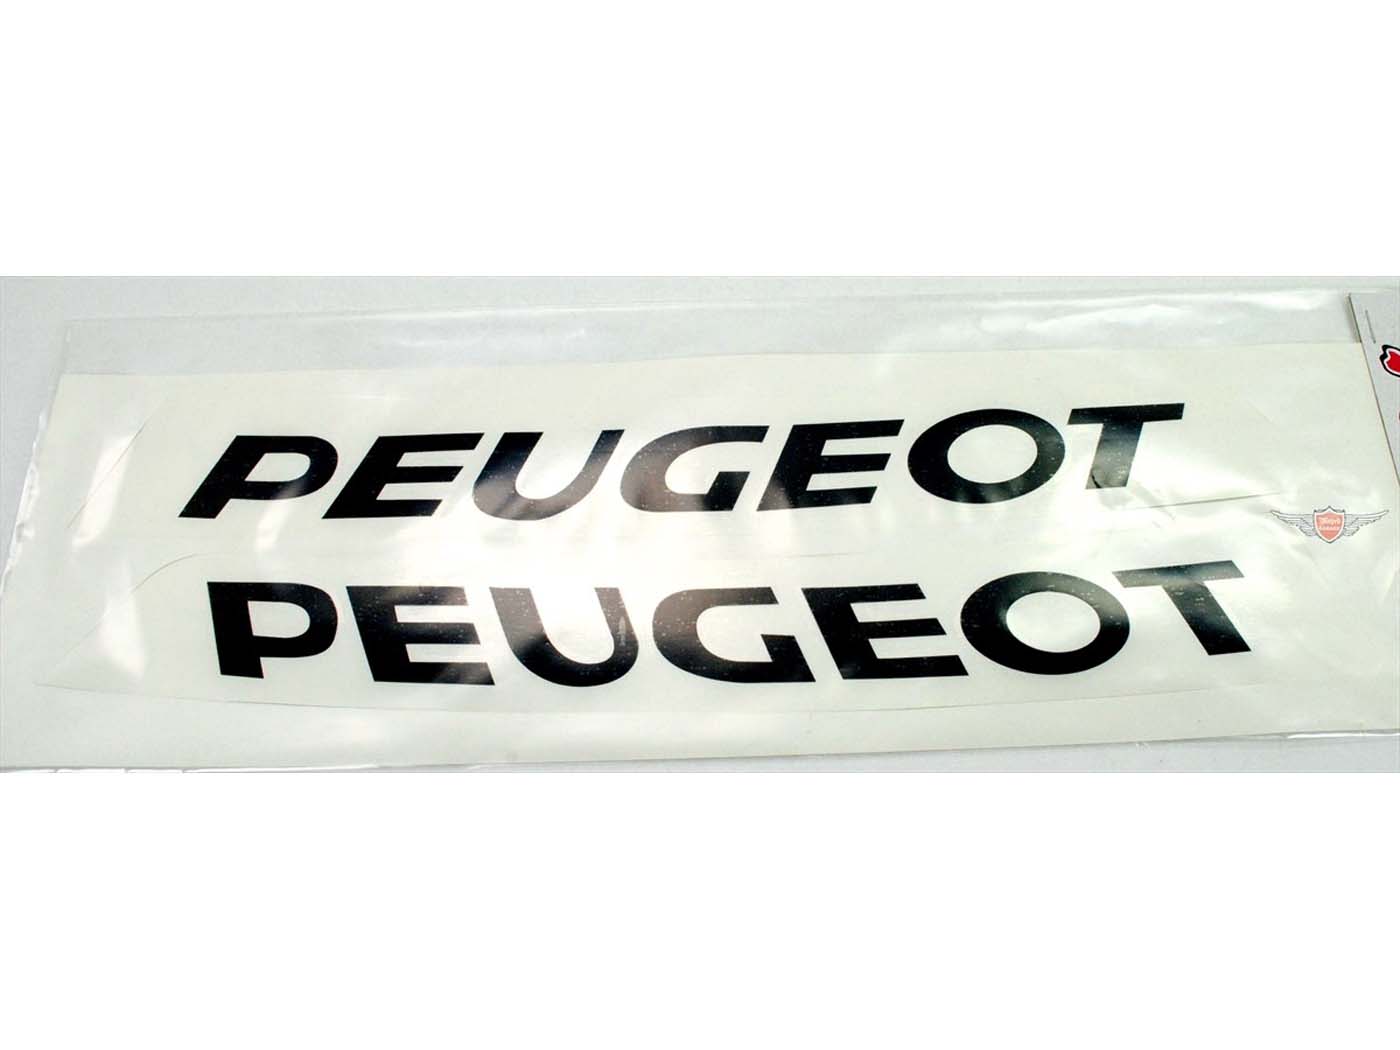 Aufkleber Satz für Peugeot Mofa Moped